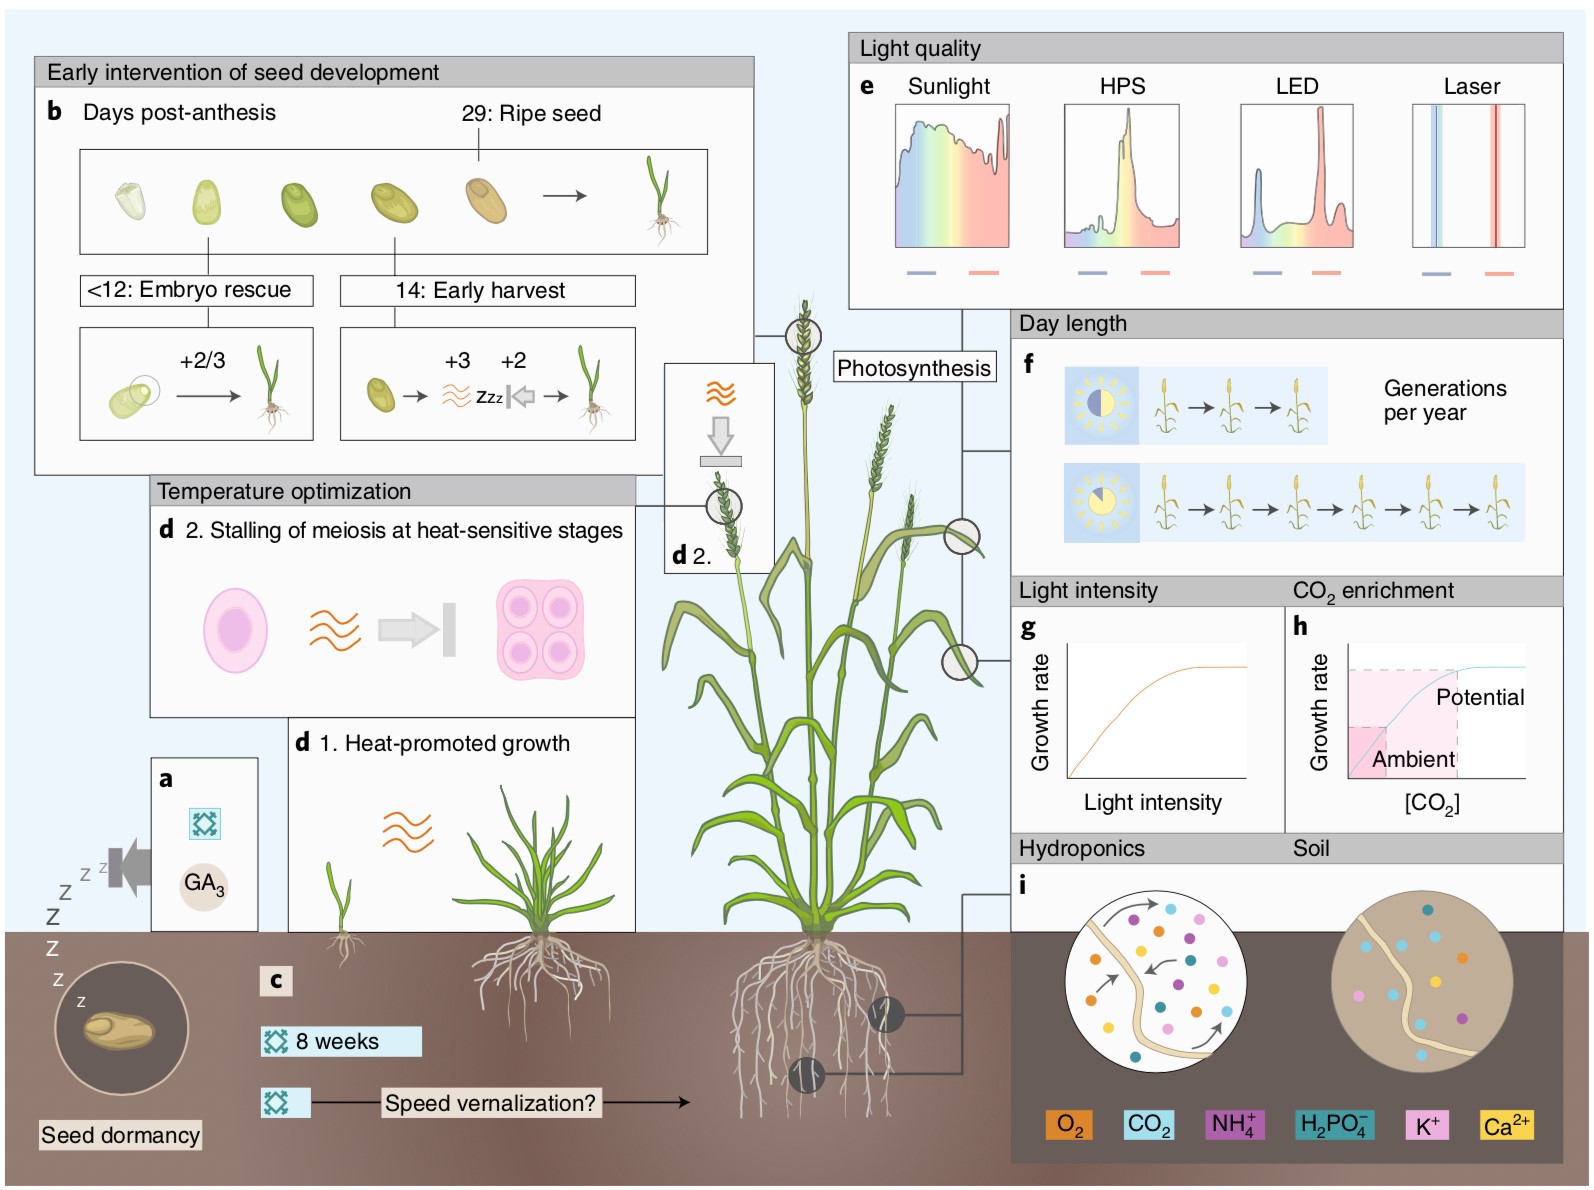 Plantae | Review: Crop breeding technologies to feed world (Nature Biotech) Plantae